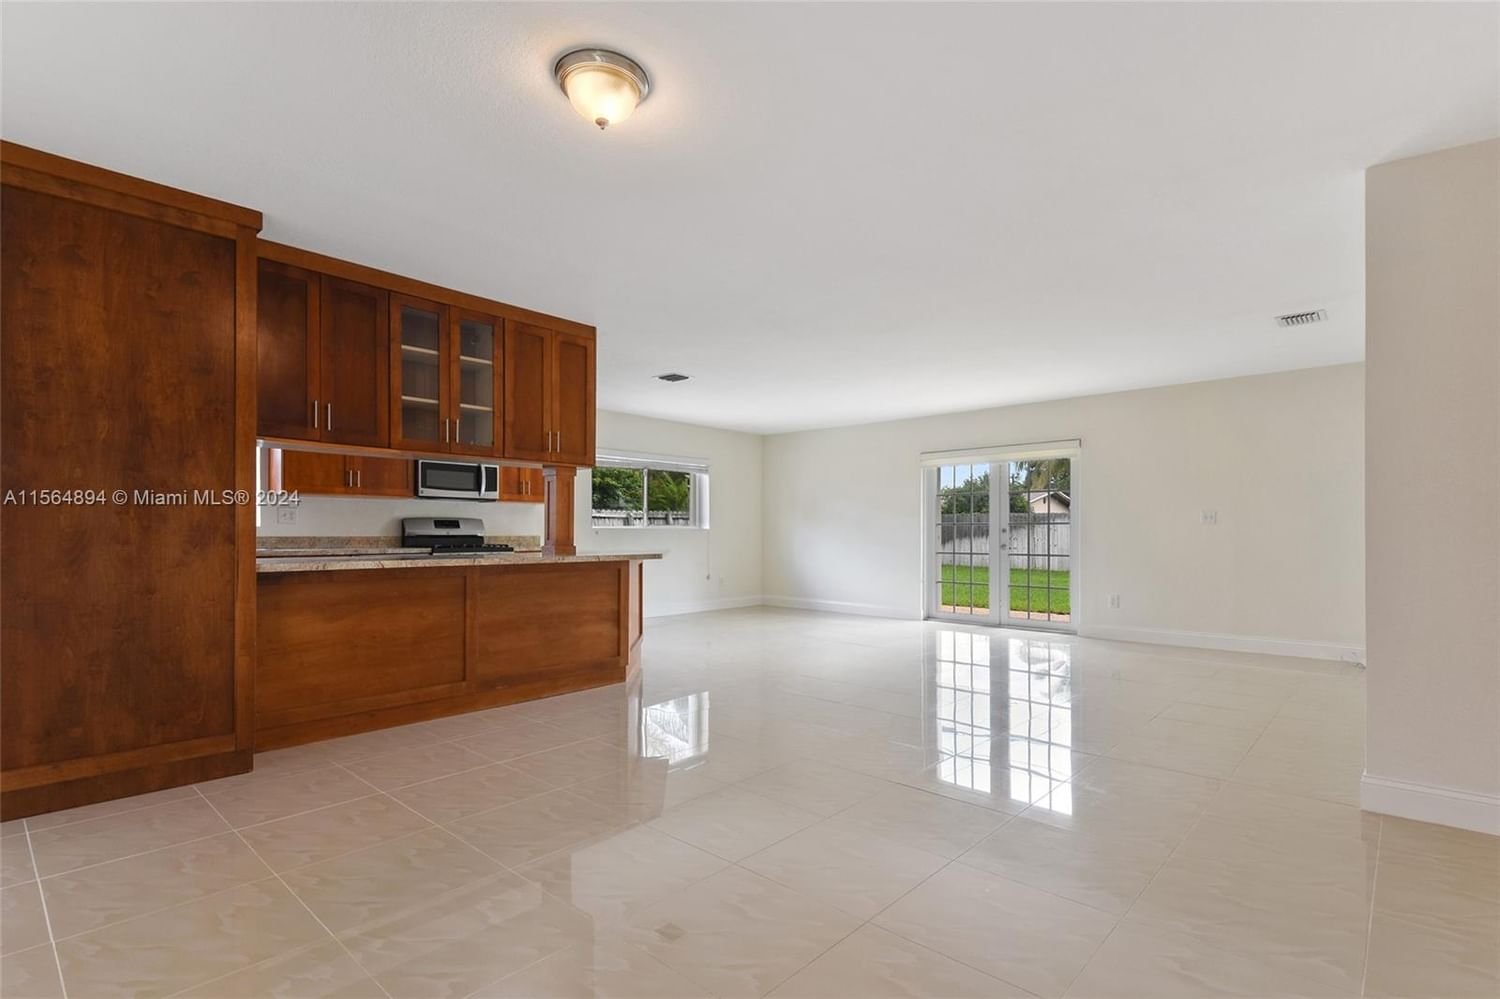 Real estate property located at 20545 Leeward Ln, Miami-Dade County, CUTLER RIDGE SEC 4, Cutler Bay, FL